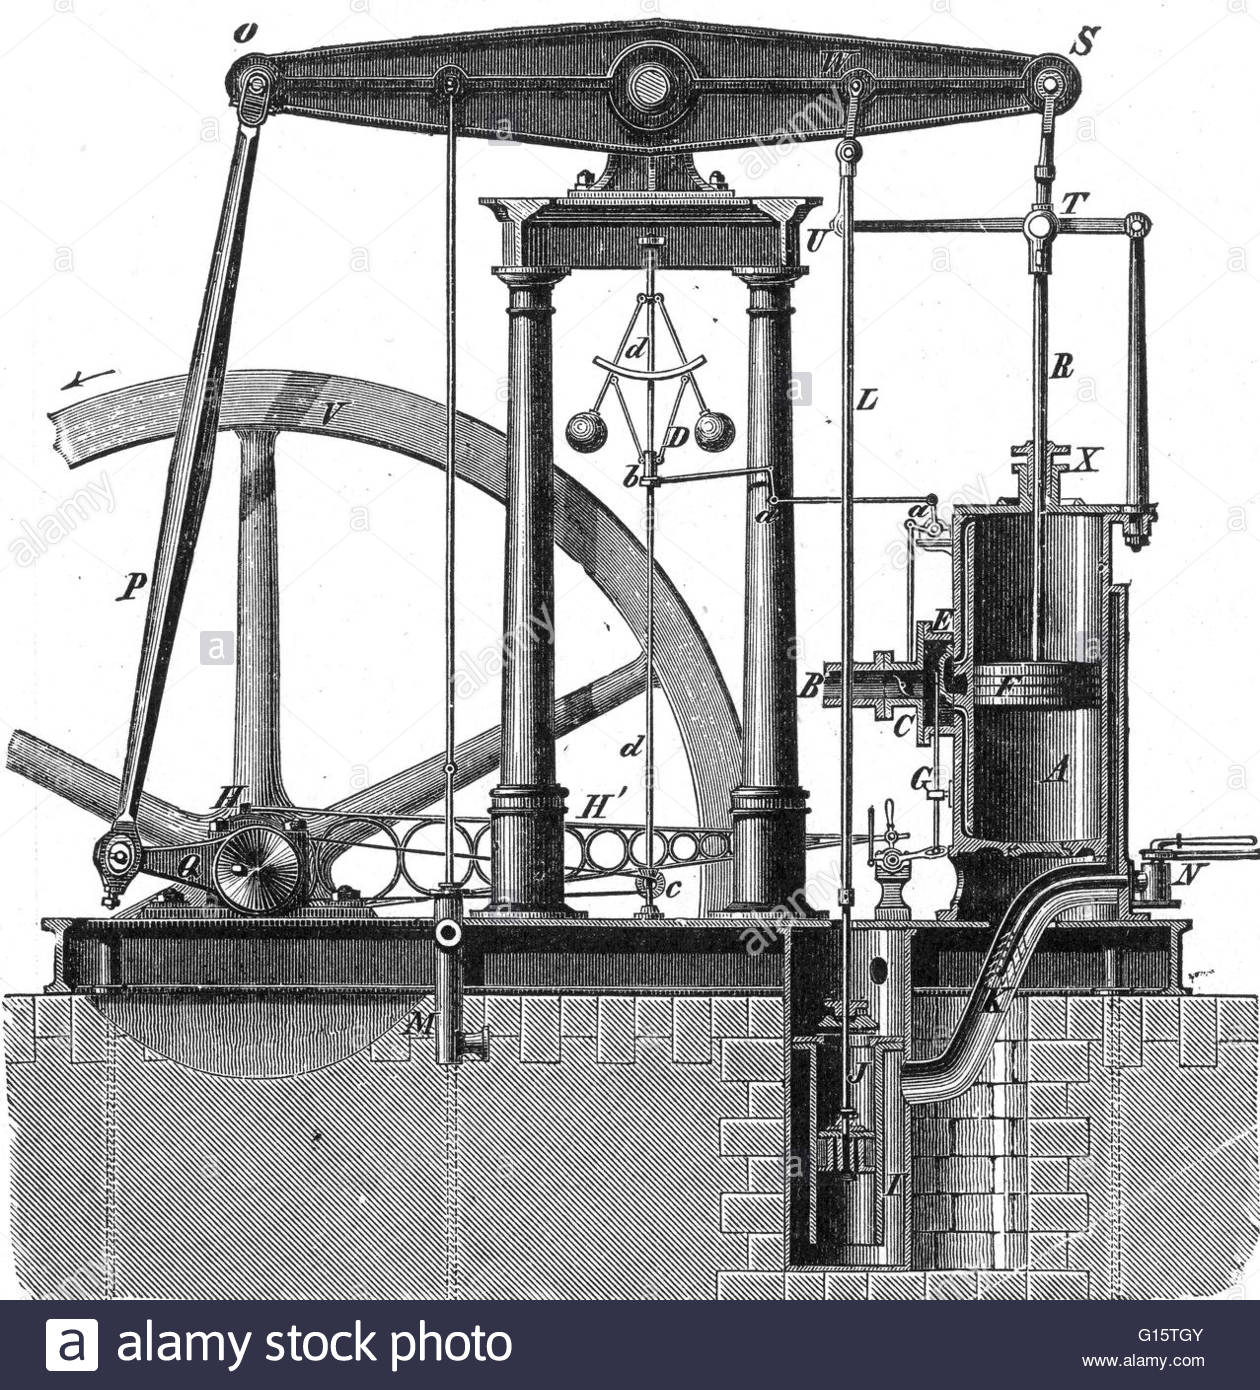 the-watts-steam-engine-was-the-first-type-of-steam-engine-to-make-G15TGY.jpg